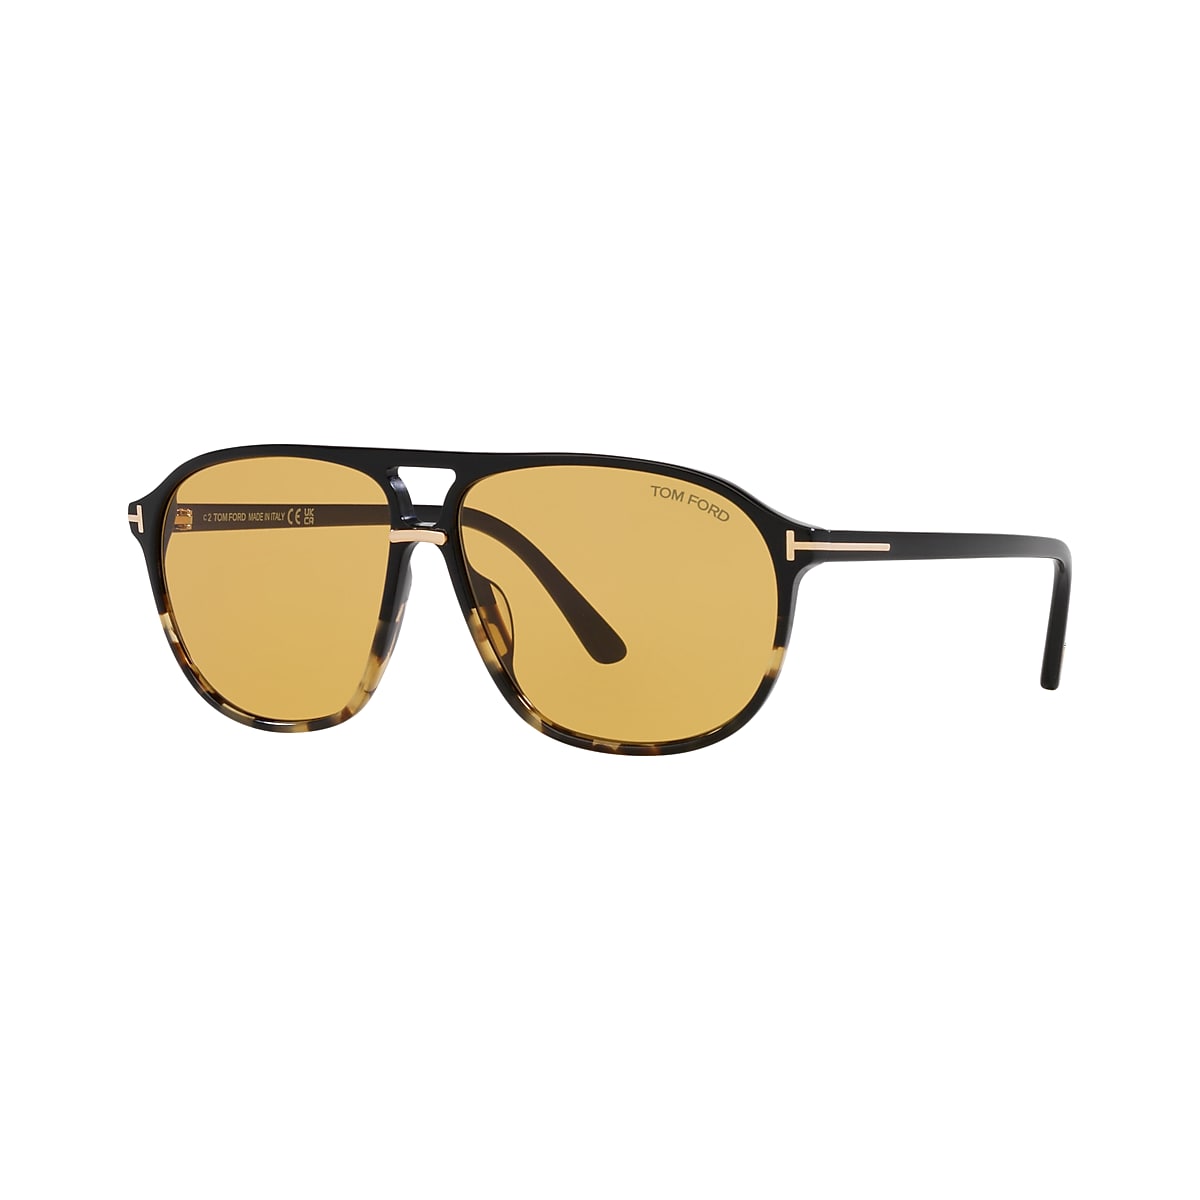 TOM FORD Bruce Black - Man Luxury Sunglasses, Brown Lens